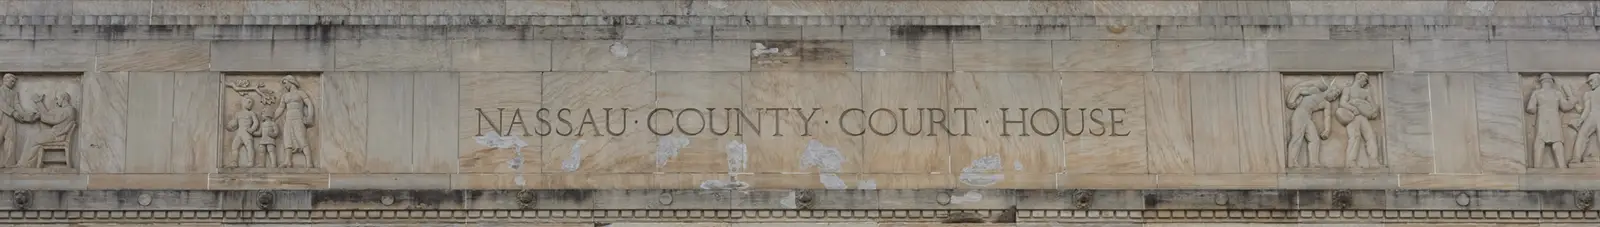 nassau county court house